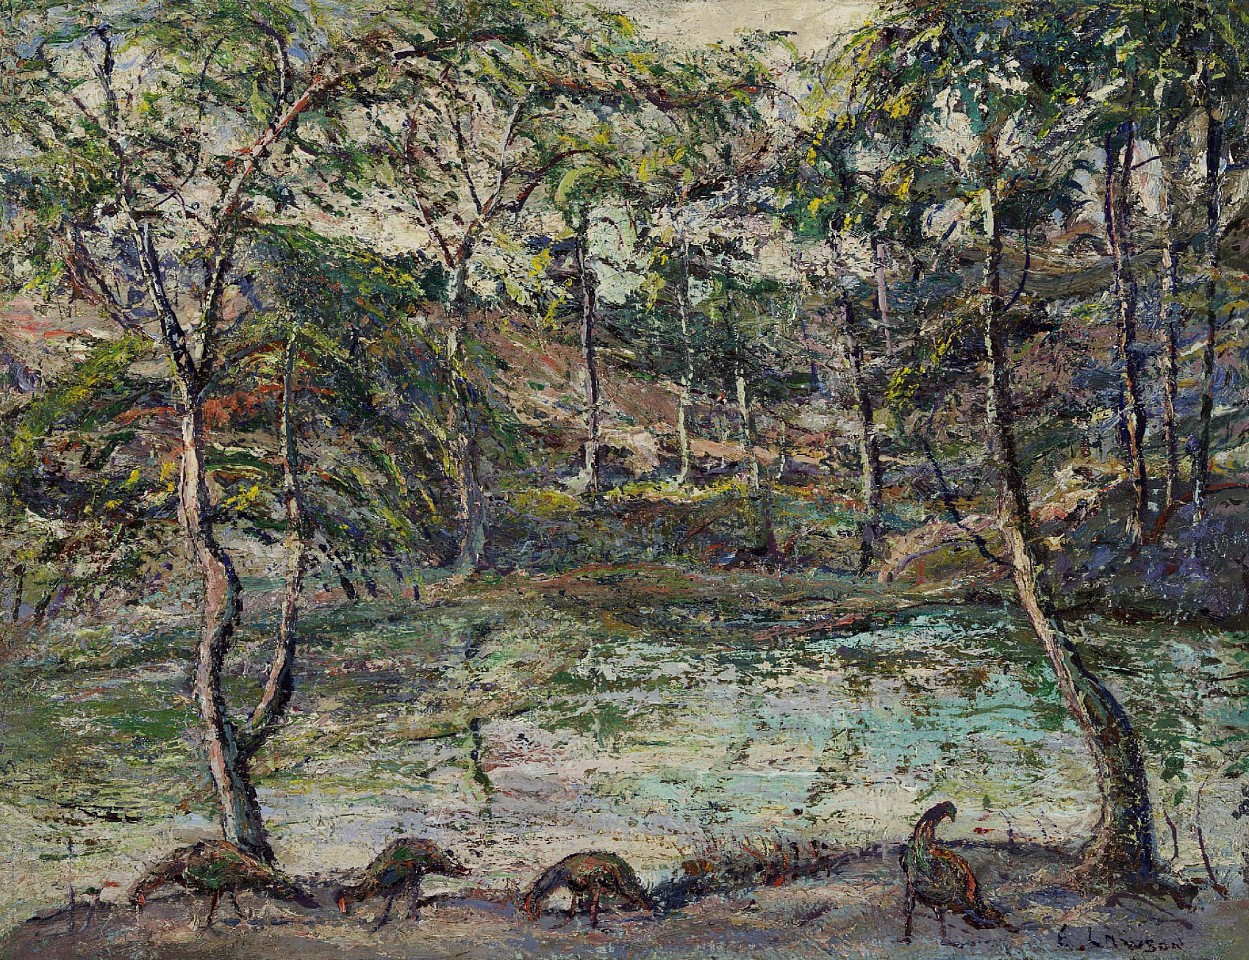 Ernest Lawson, Wild Turkeys, Colorado, c. 1927-29
oil on canvas, 16 x 20 in. (40.6 x 50.8 cm)
EL1904001